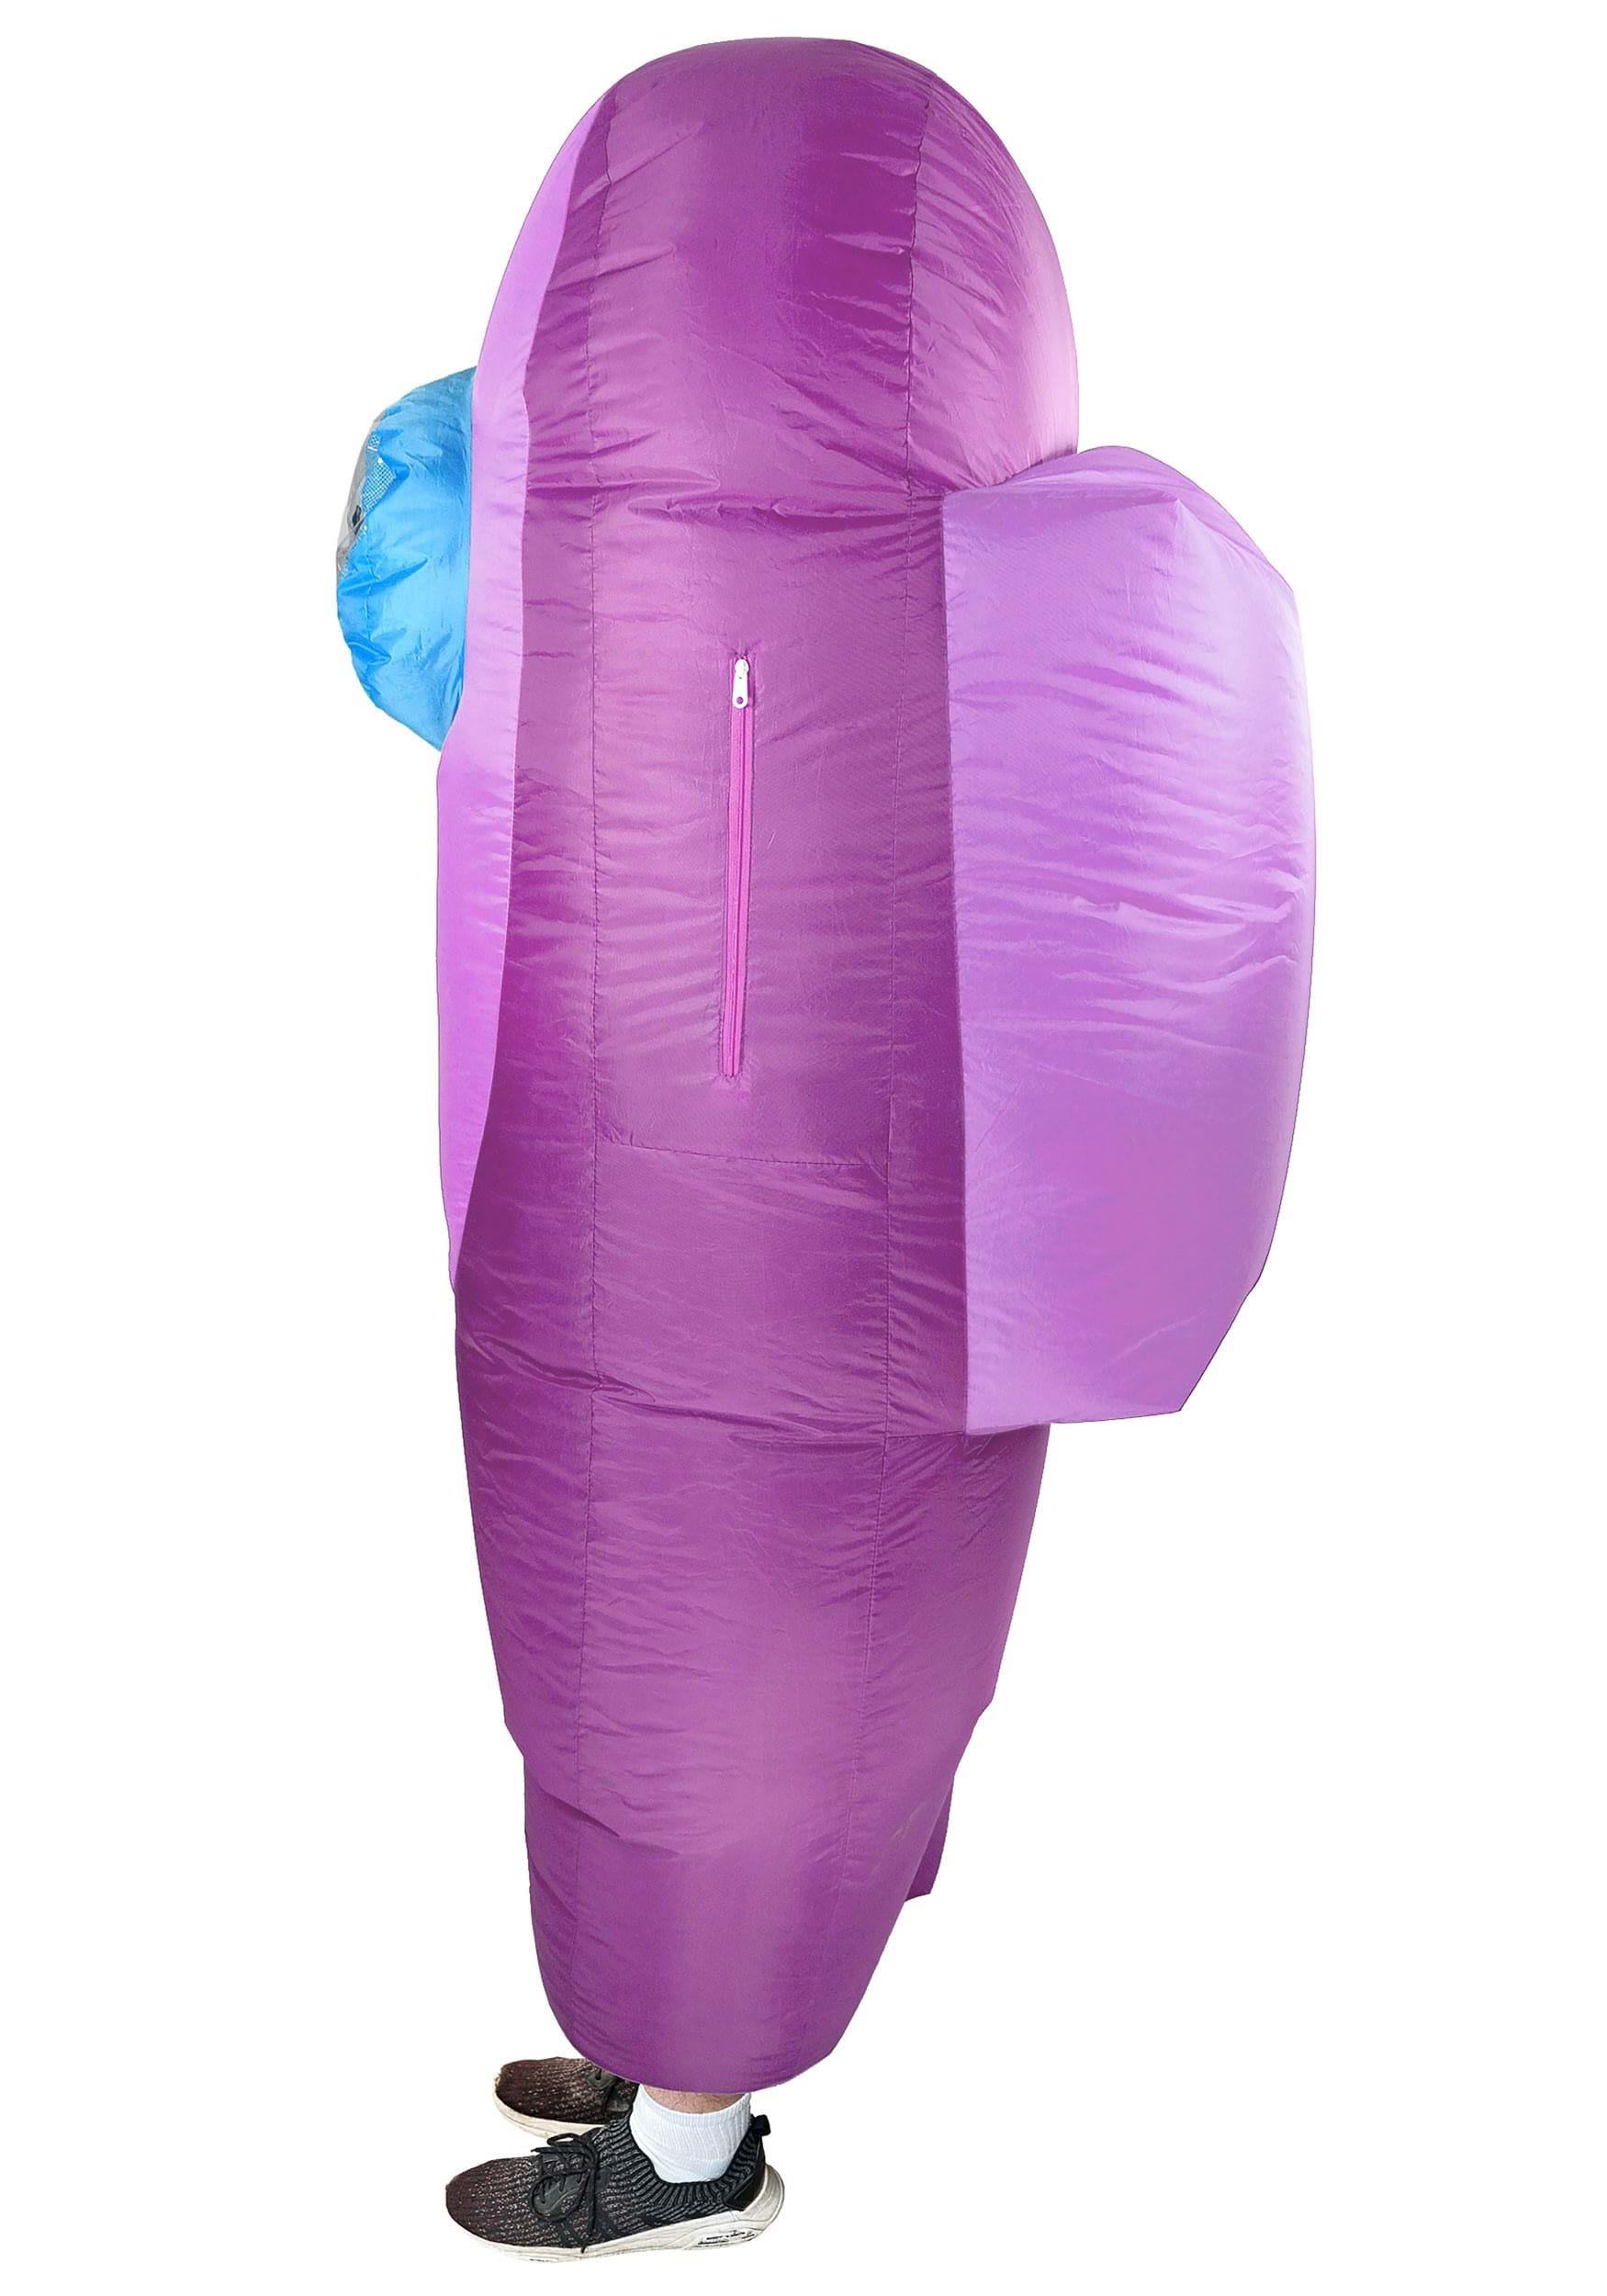 Purple Sus Crewmate Killer Costume For Kids